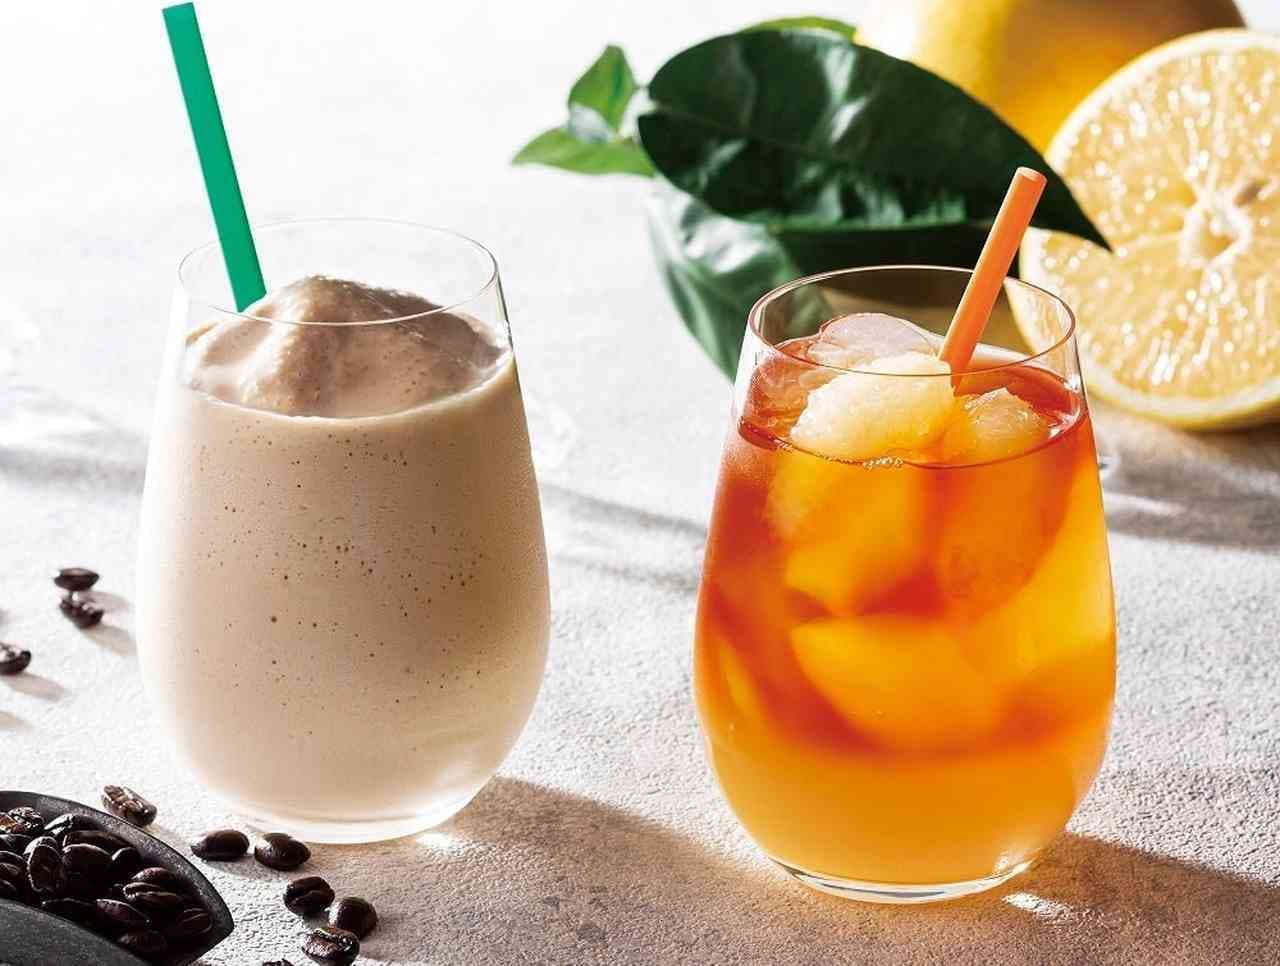 Tully's "Espresso Shake" and "& TEA Grapefruit Separate Tea